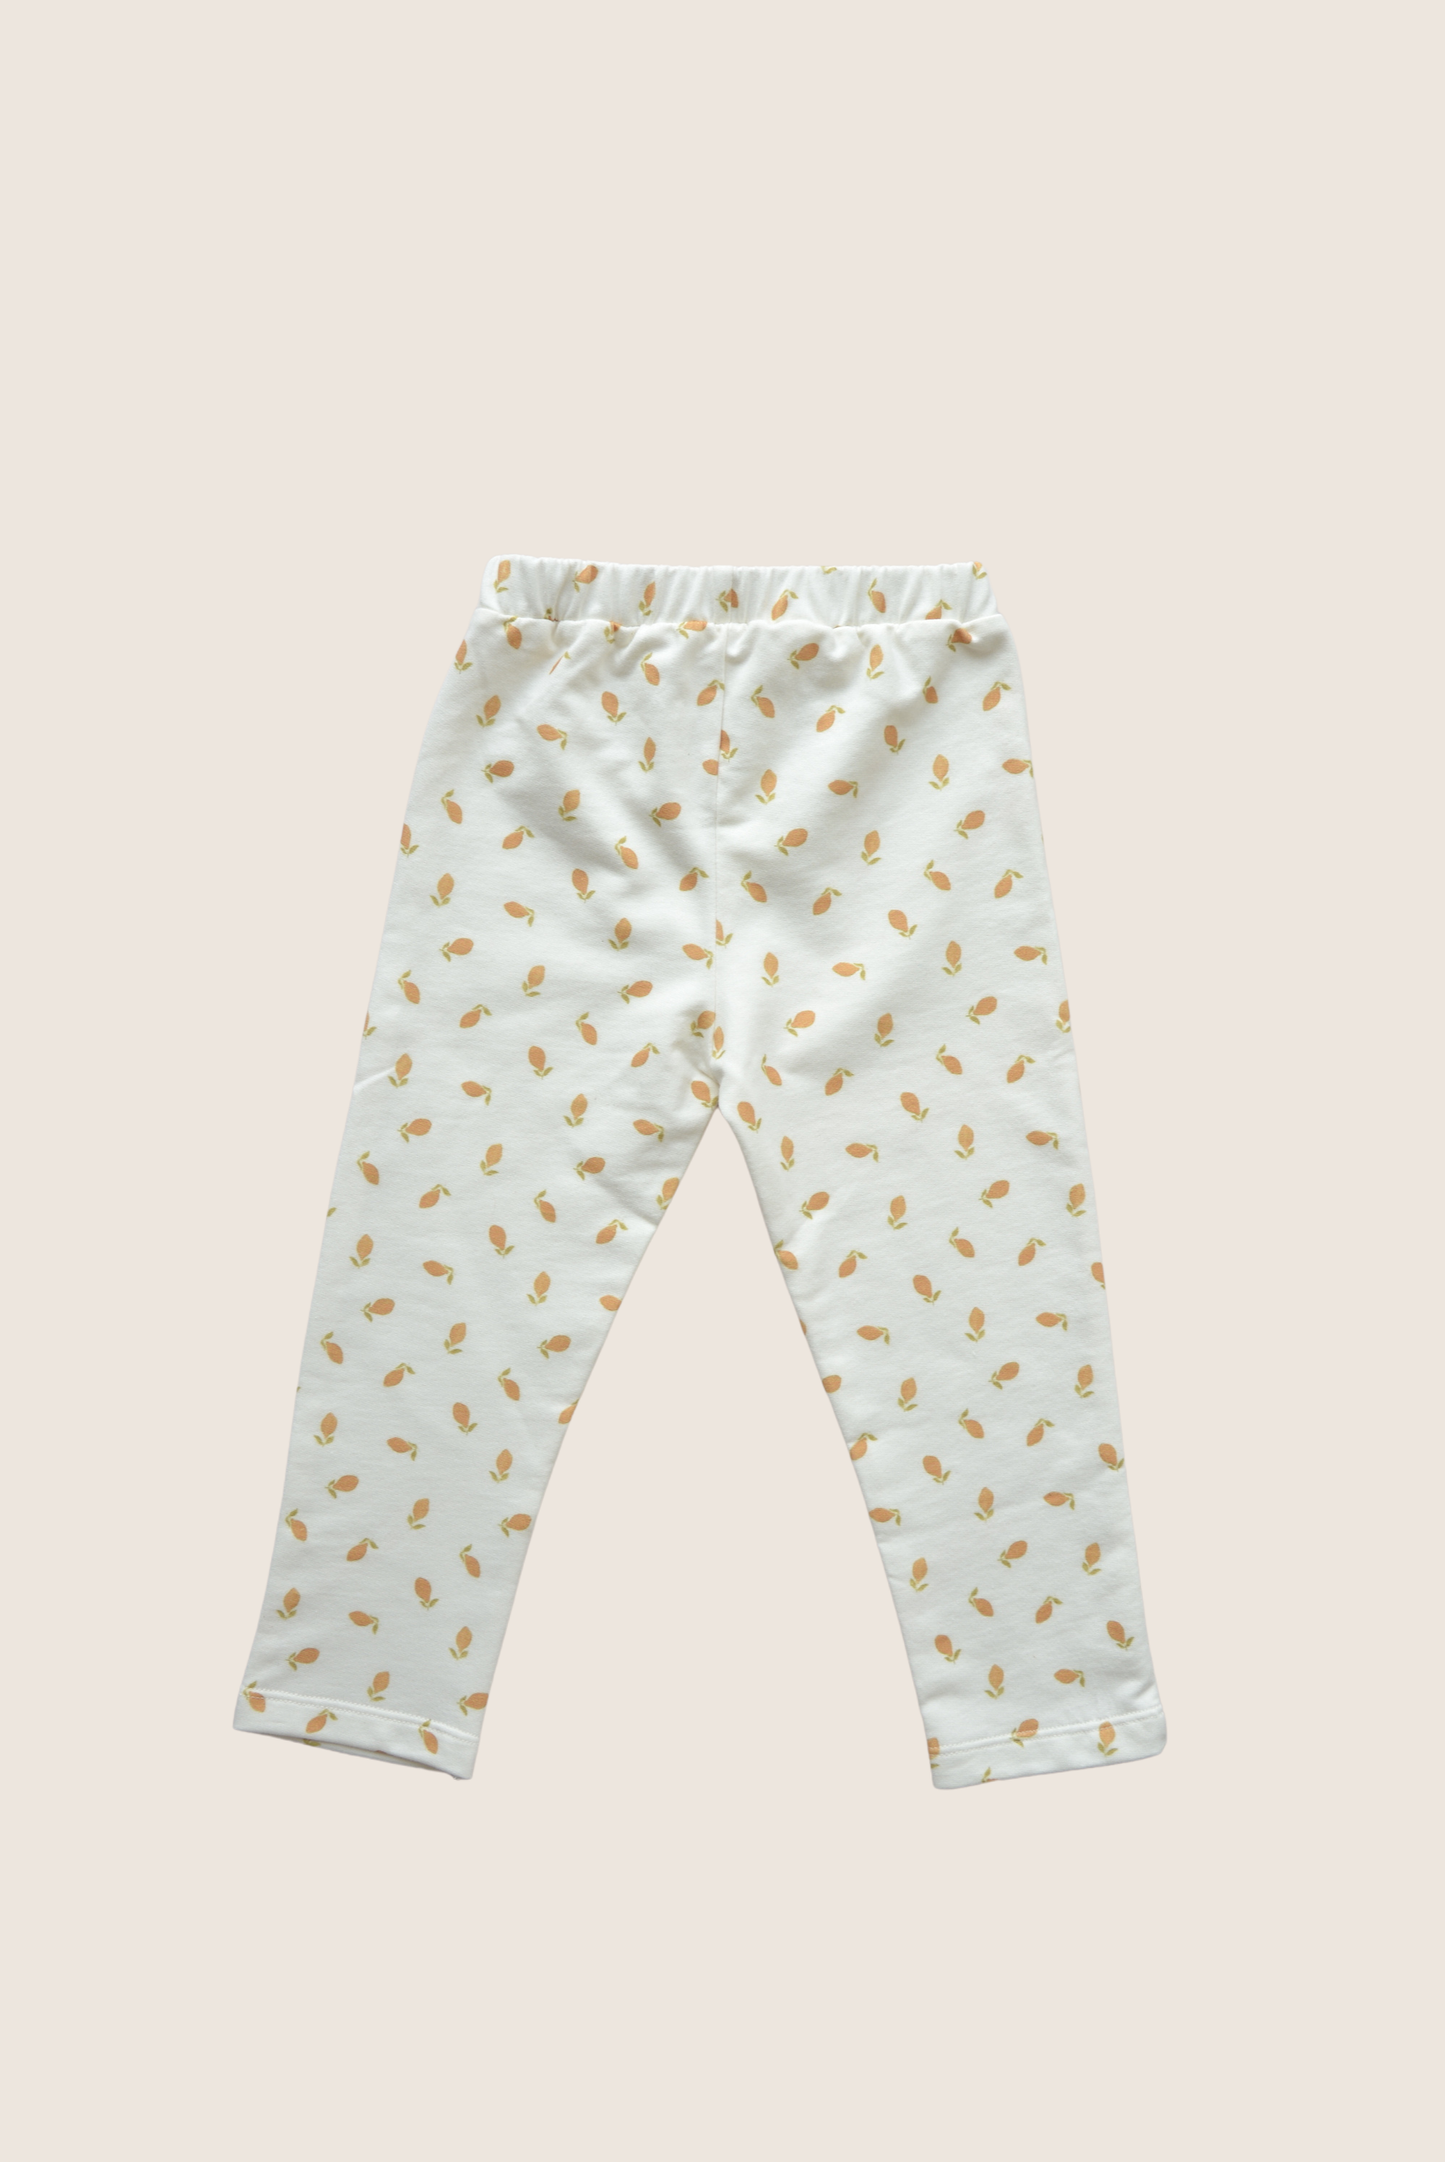 Eli & Nev - Baby/Kids Lemon Patterned White Pants 100% Cotton OEKO-TEX